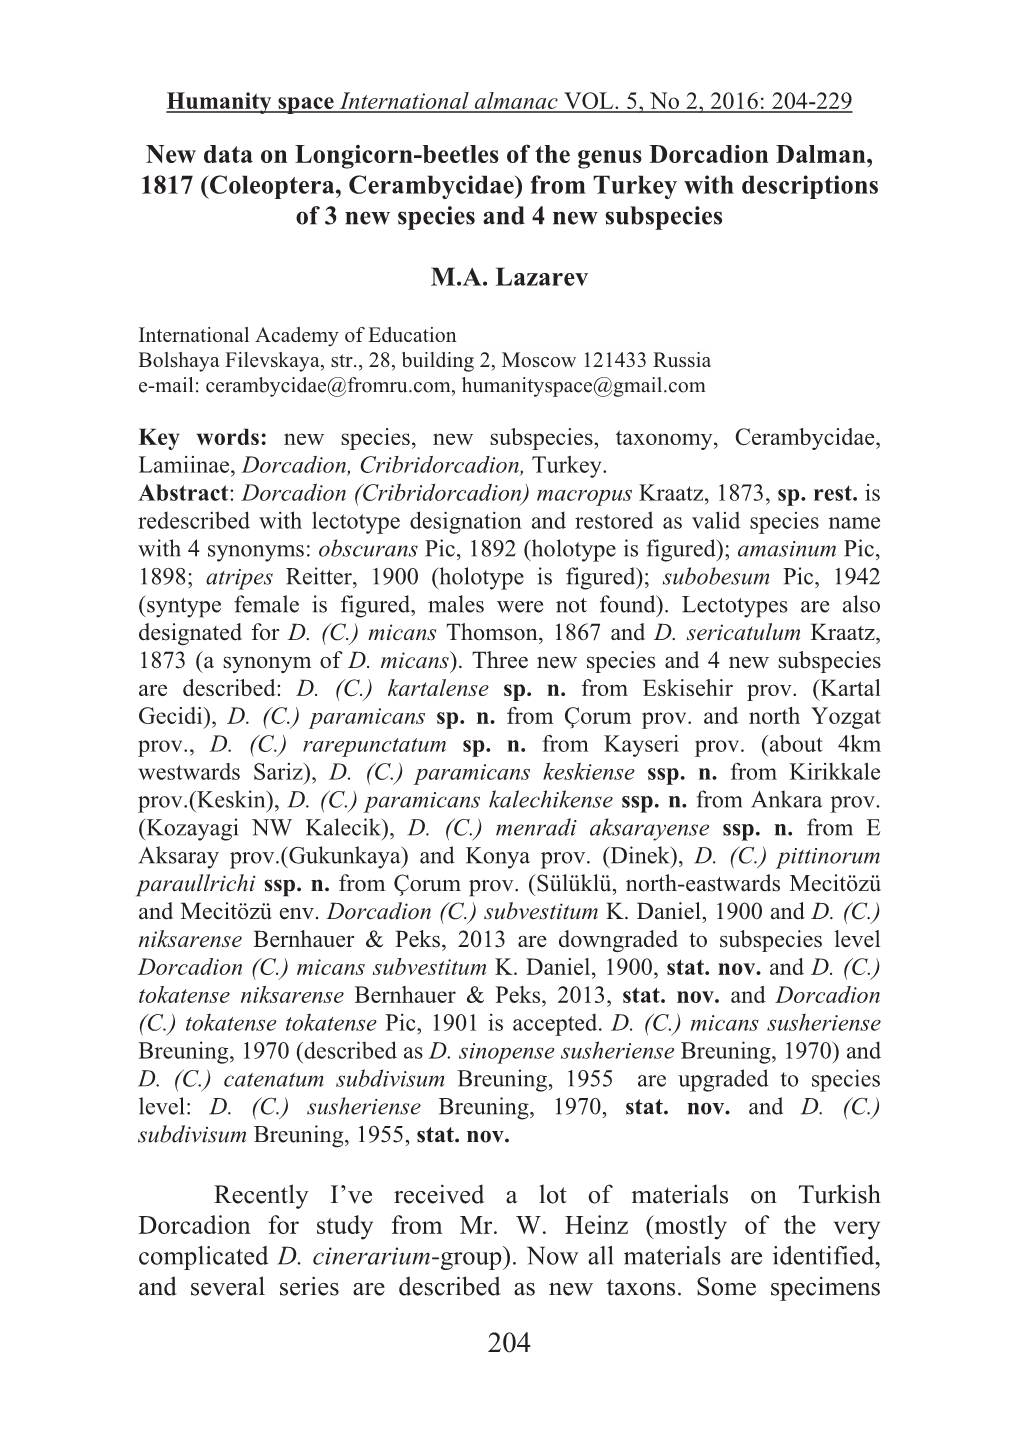 New Data on Longicorn-Beetles of the Genus Dorcadion Dalman, 1817